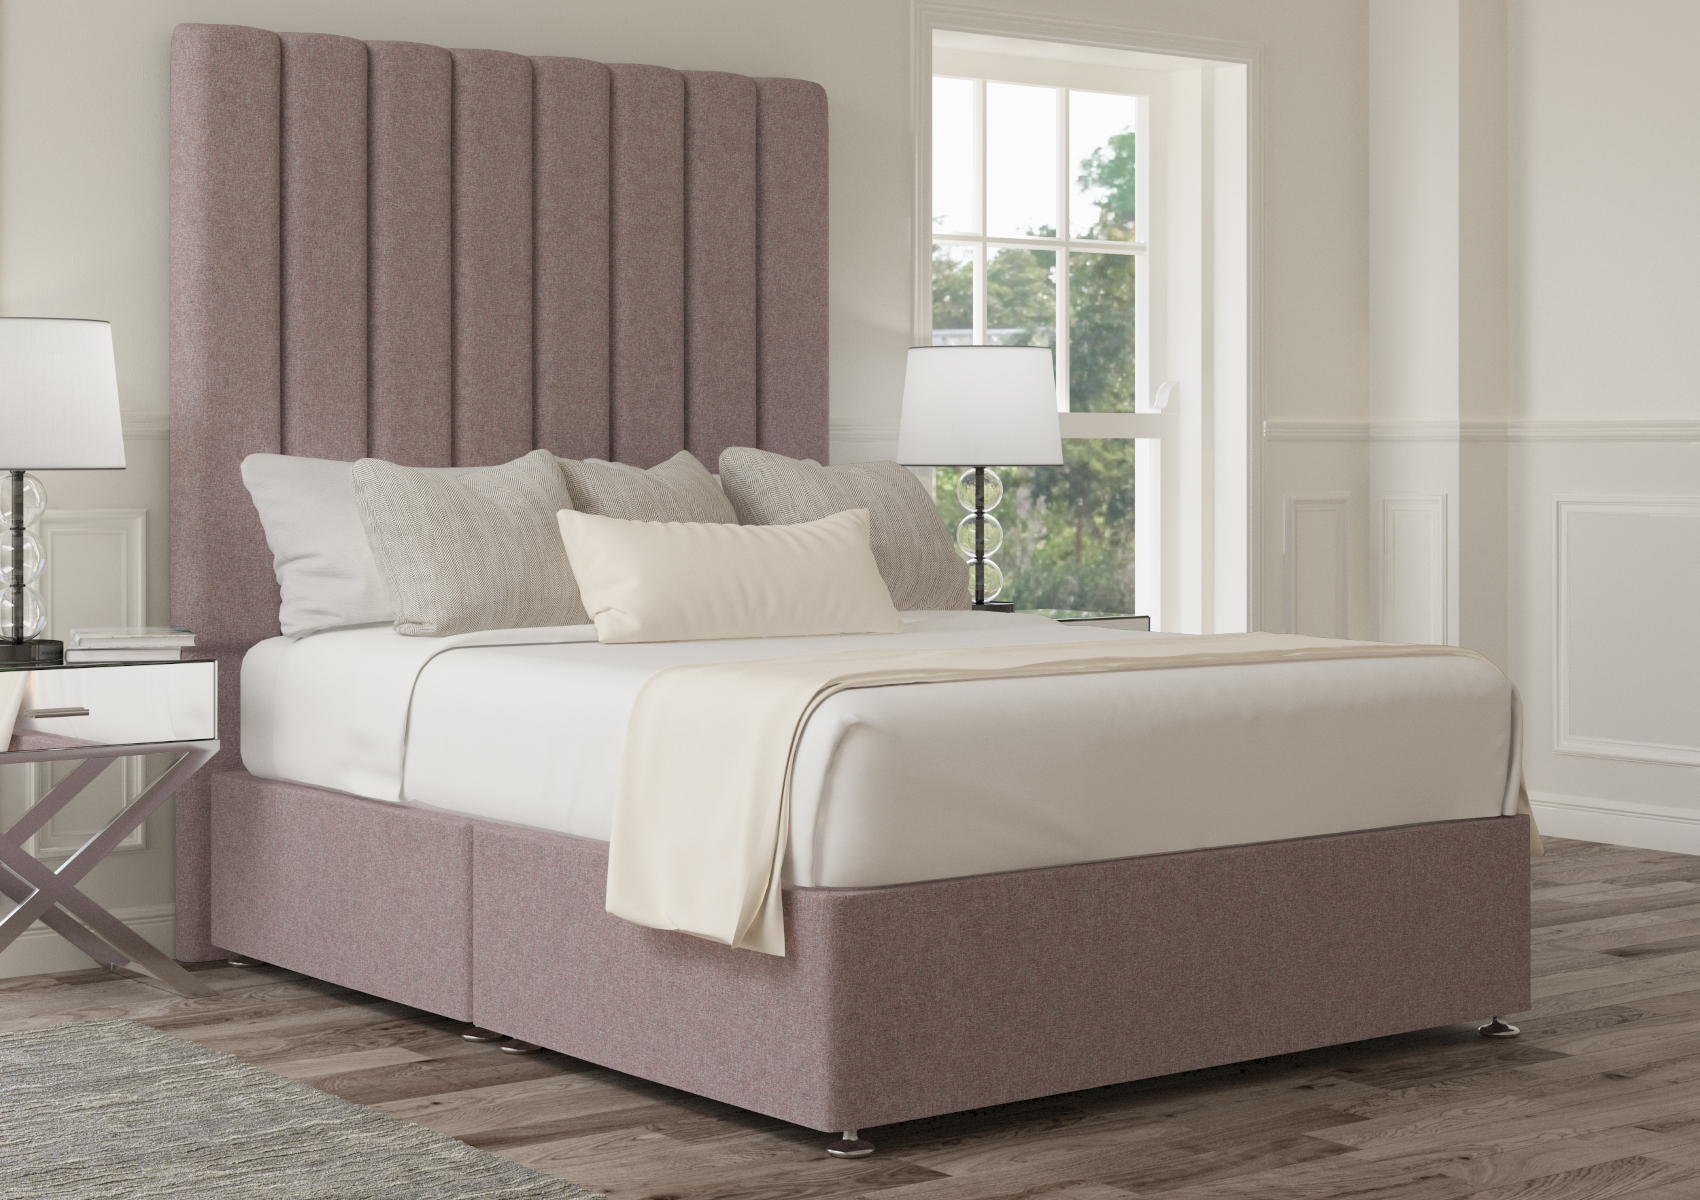 View Esme Arran Natural Upholstered King Size Bed Time4Sleep information